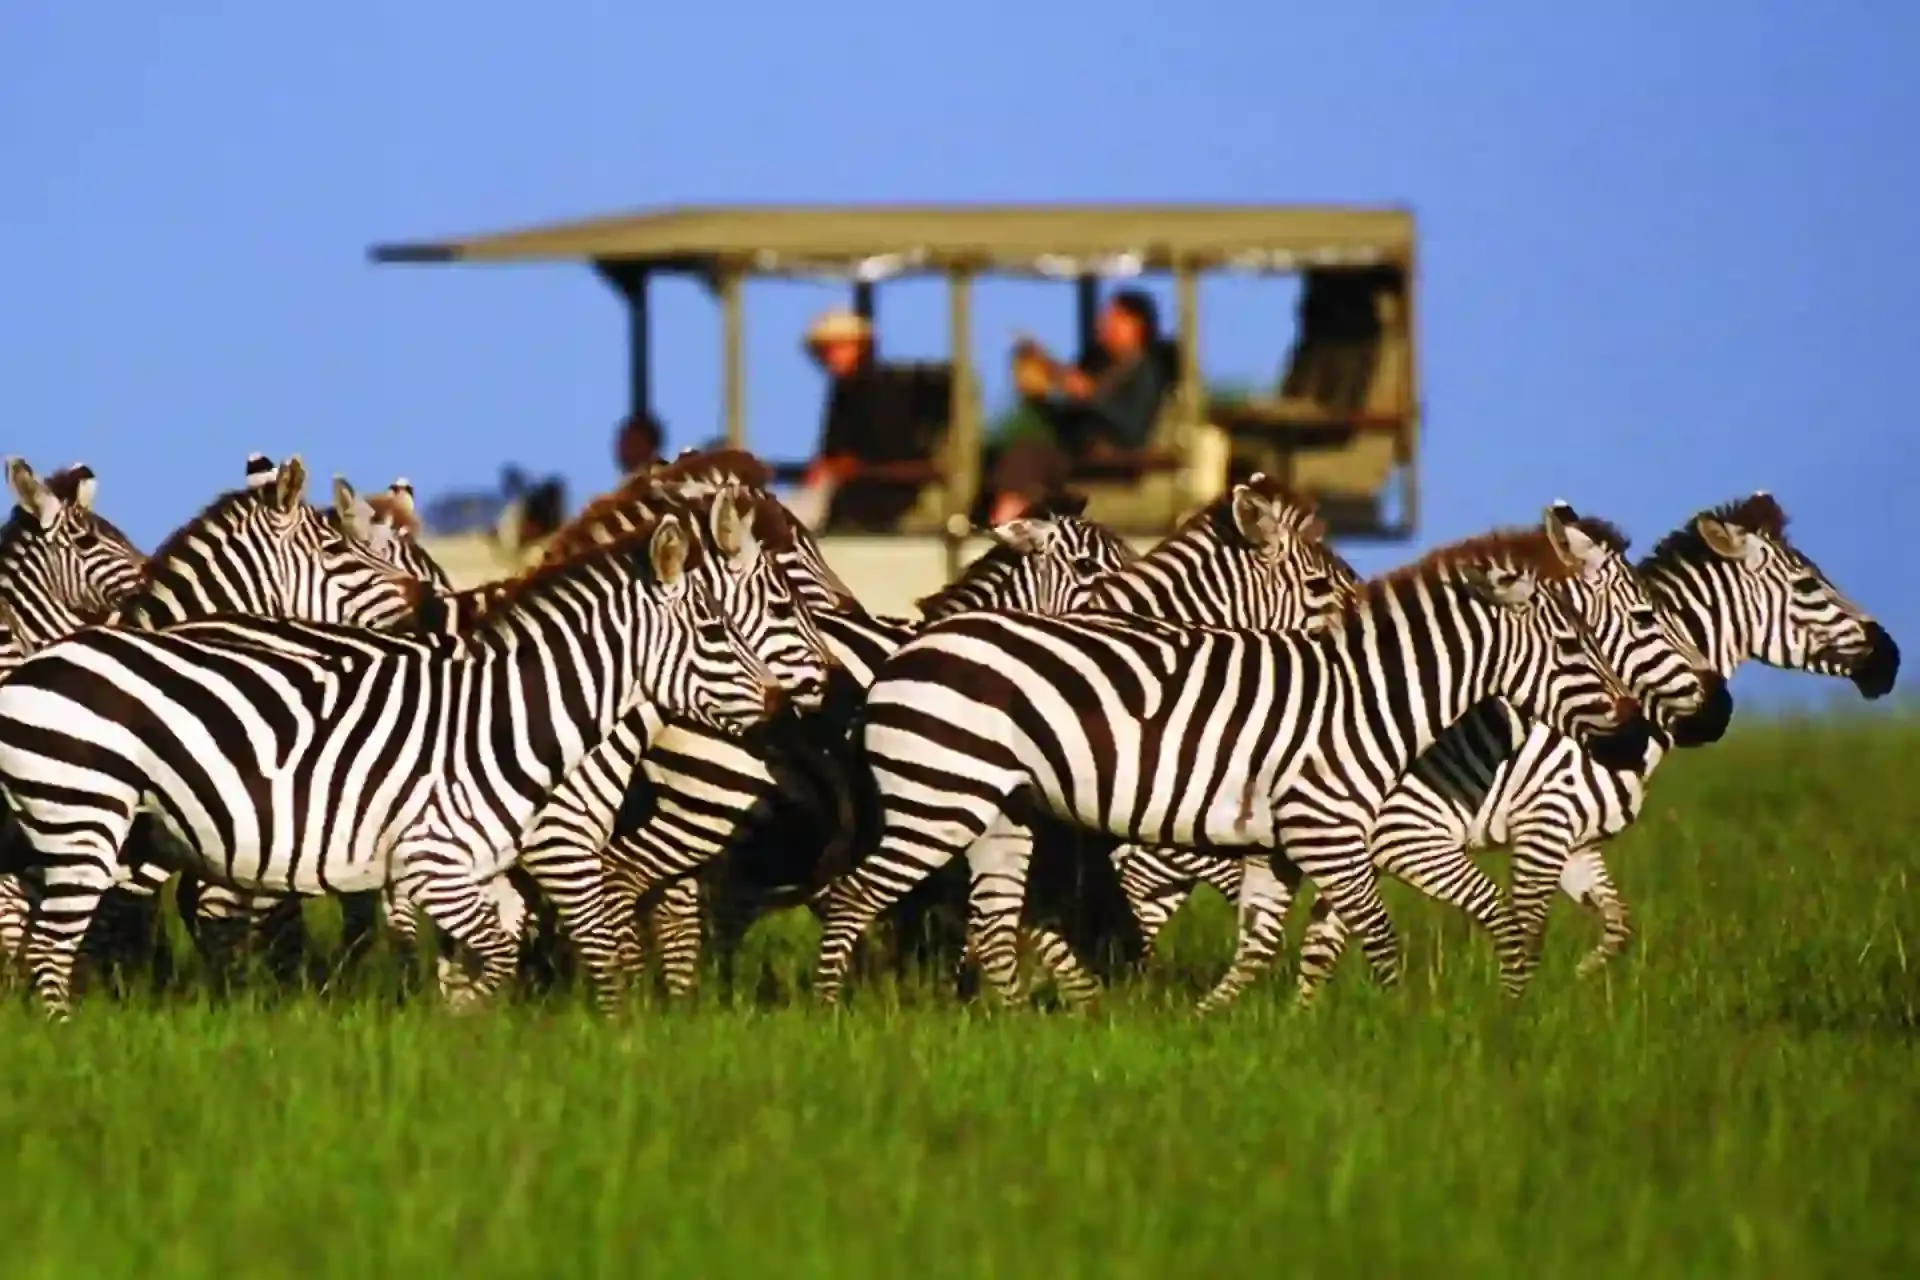 Twende Kutalii Safaris Company Ltd , a best tour operator in Tanzania